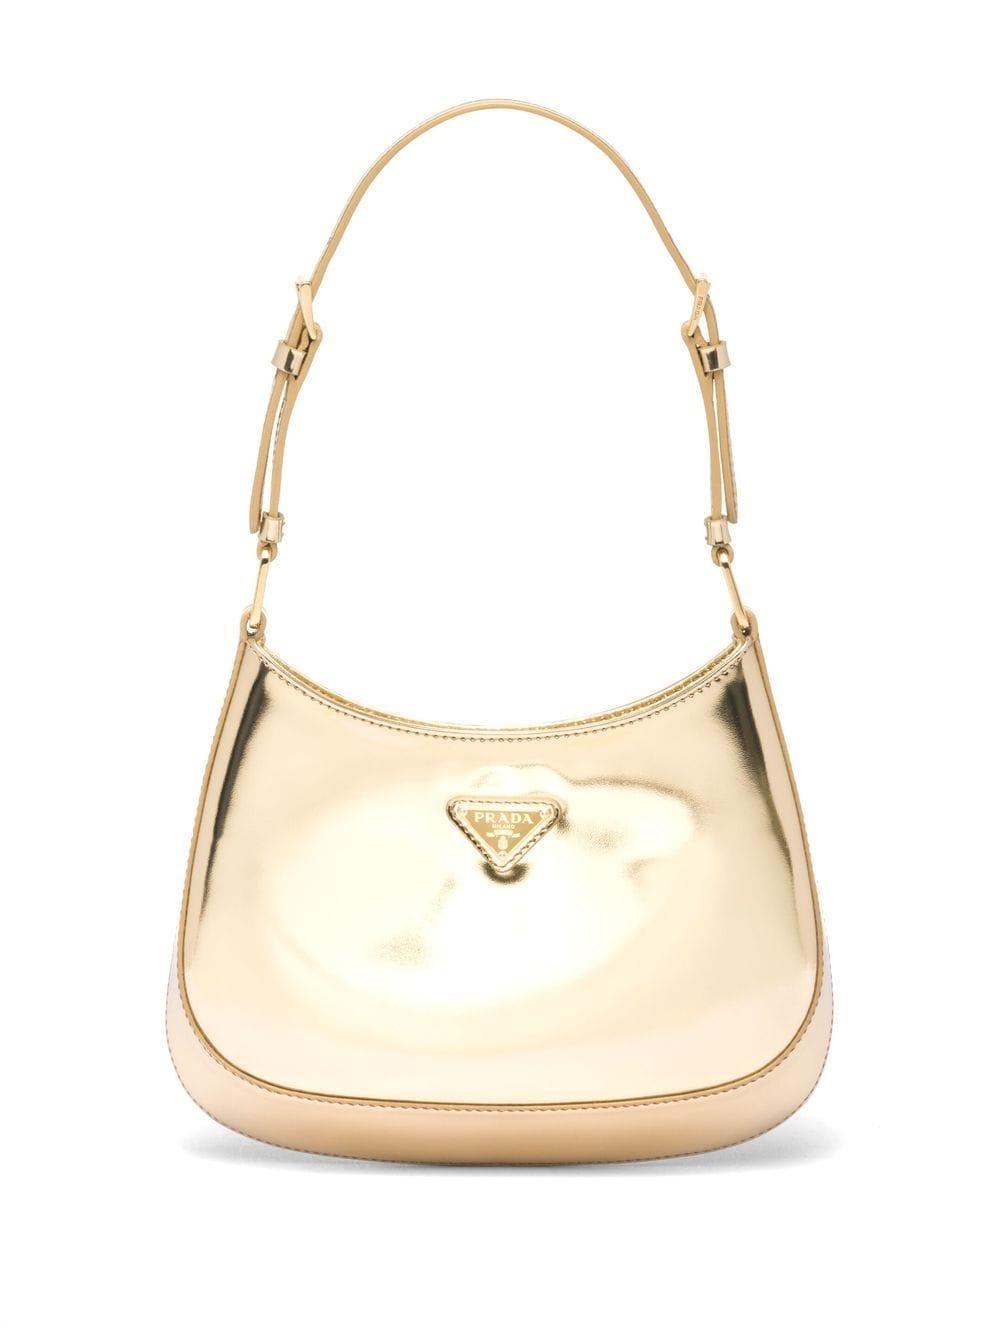 Prada Cleo leather shoulder bag - Gold von Prada